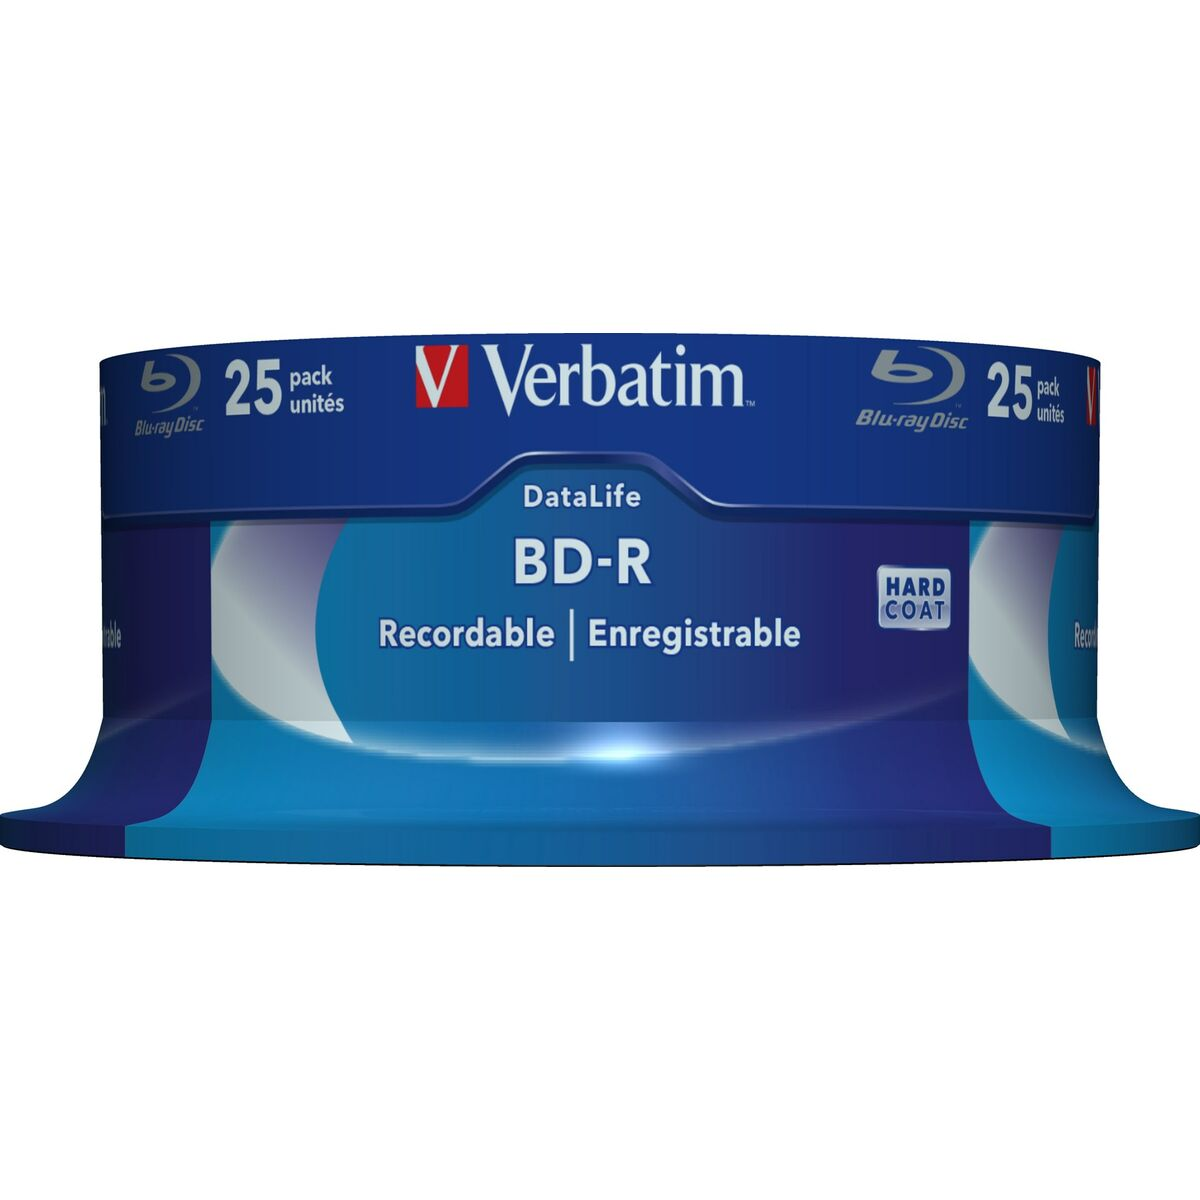 VERBATIM DVD-R Datalife 6x